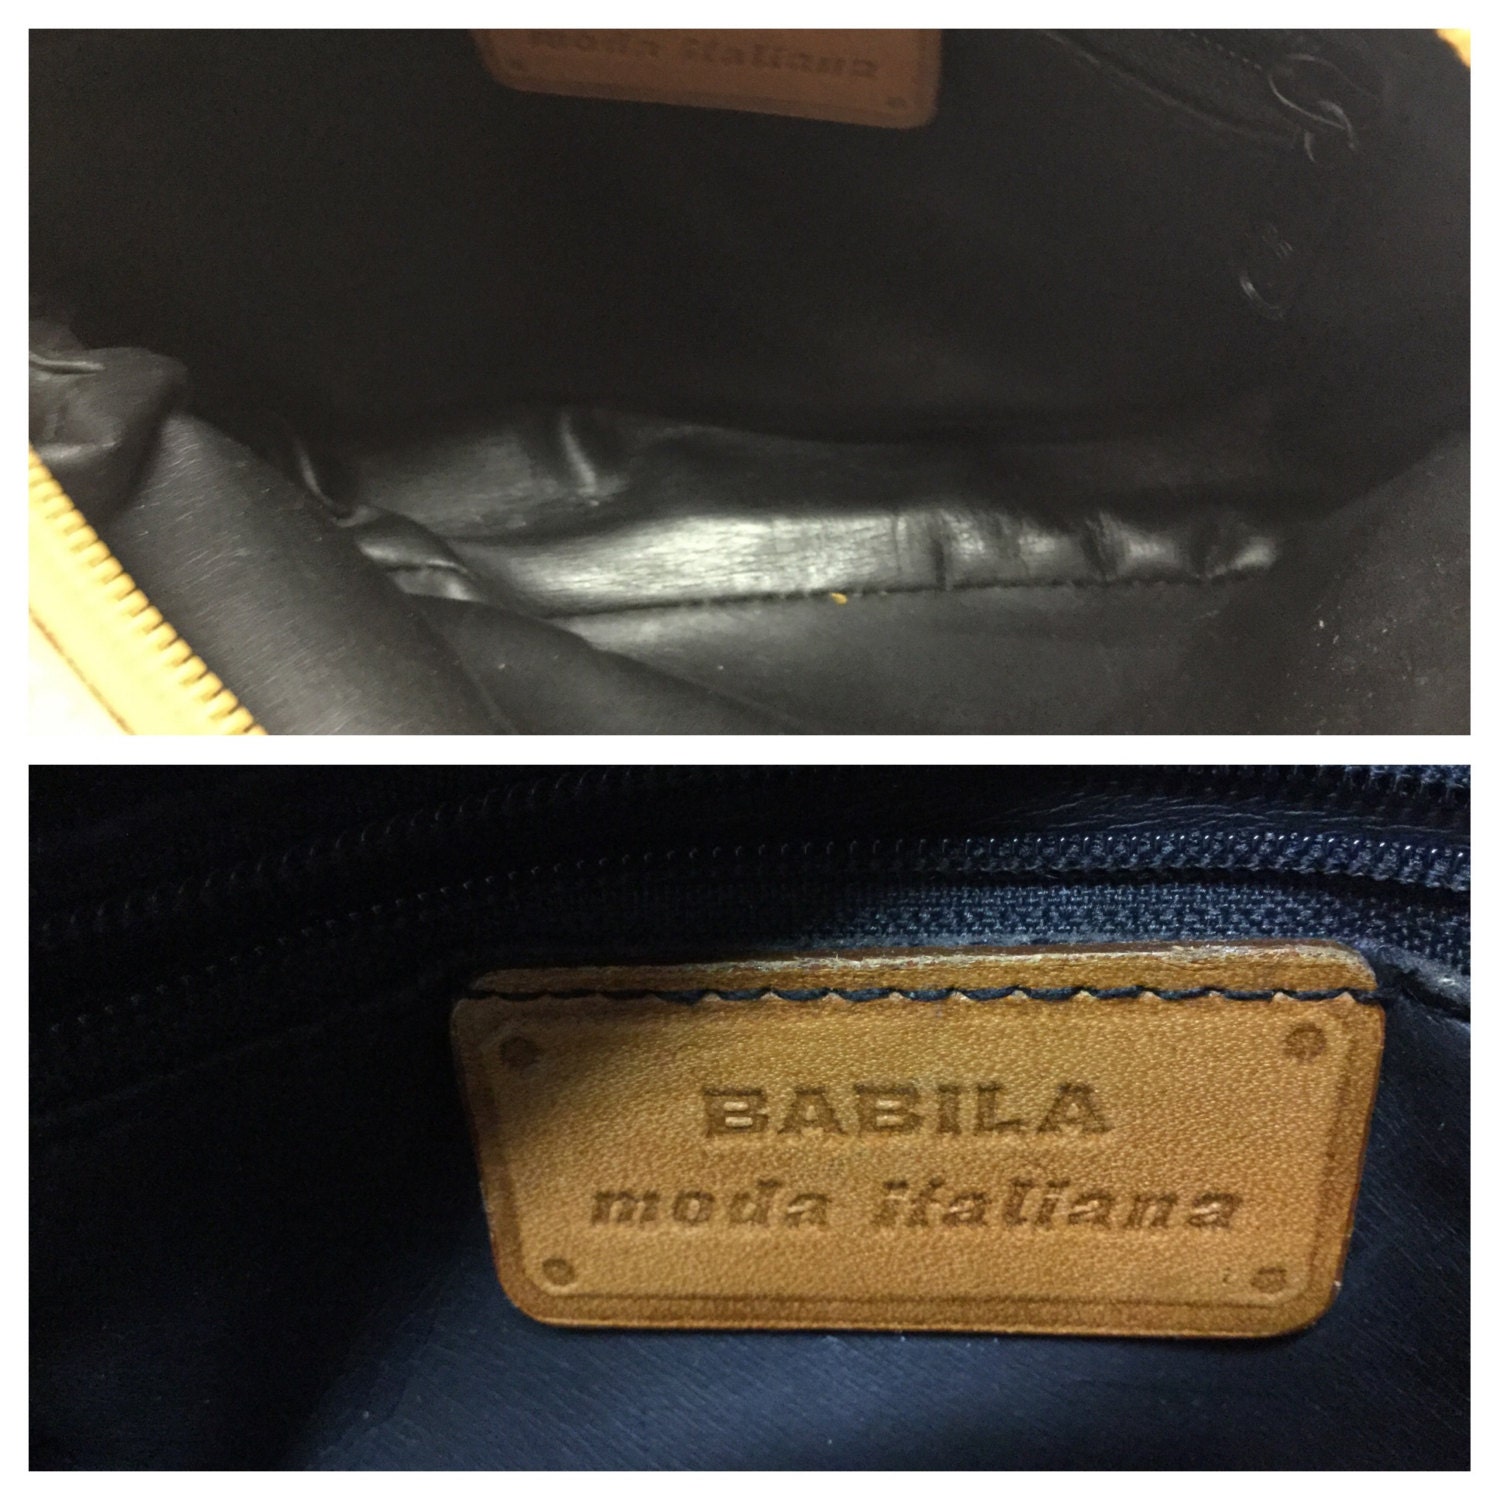 Amazon.com | S Babila Genuine Leather Holdall Travel Bag - Weekend Gym Bag  | Travel Duffels